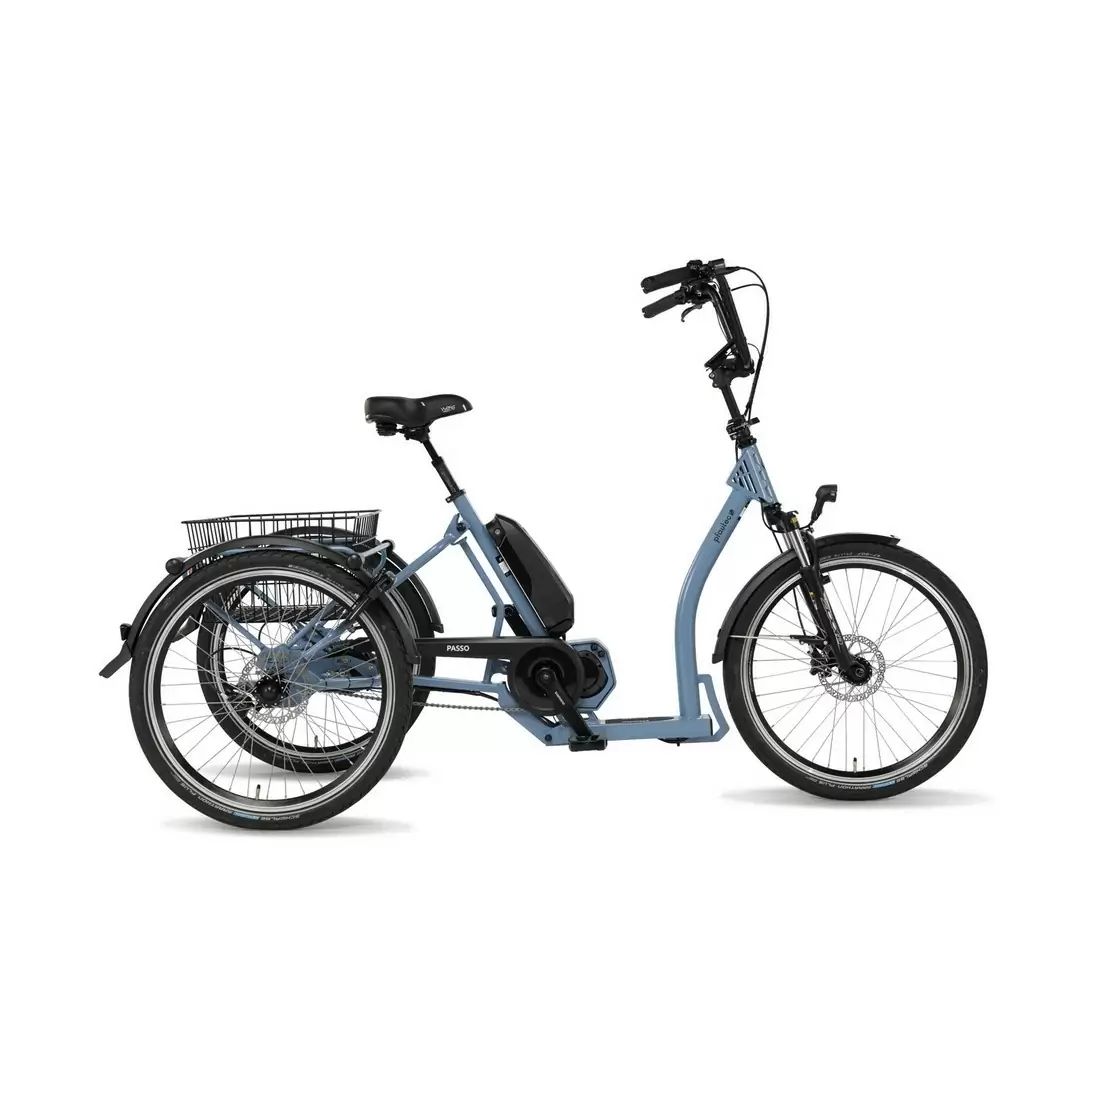 Triciclo Eléctrico Distancia Entre Ejes 24'' 5v 504Wh Shimano STEPS DUE6100 Azul Talla Única - image